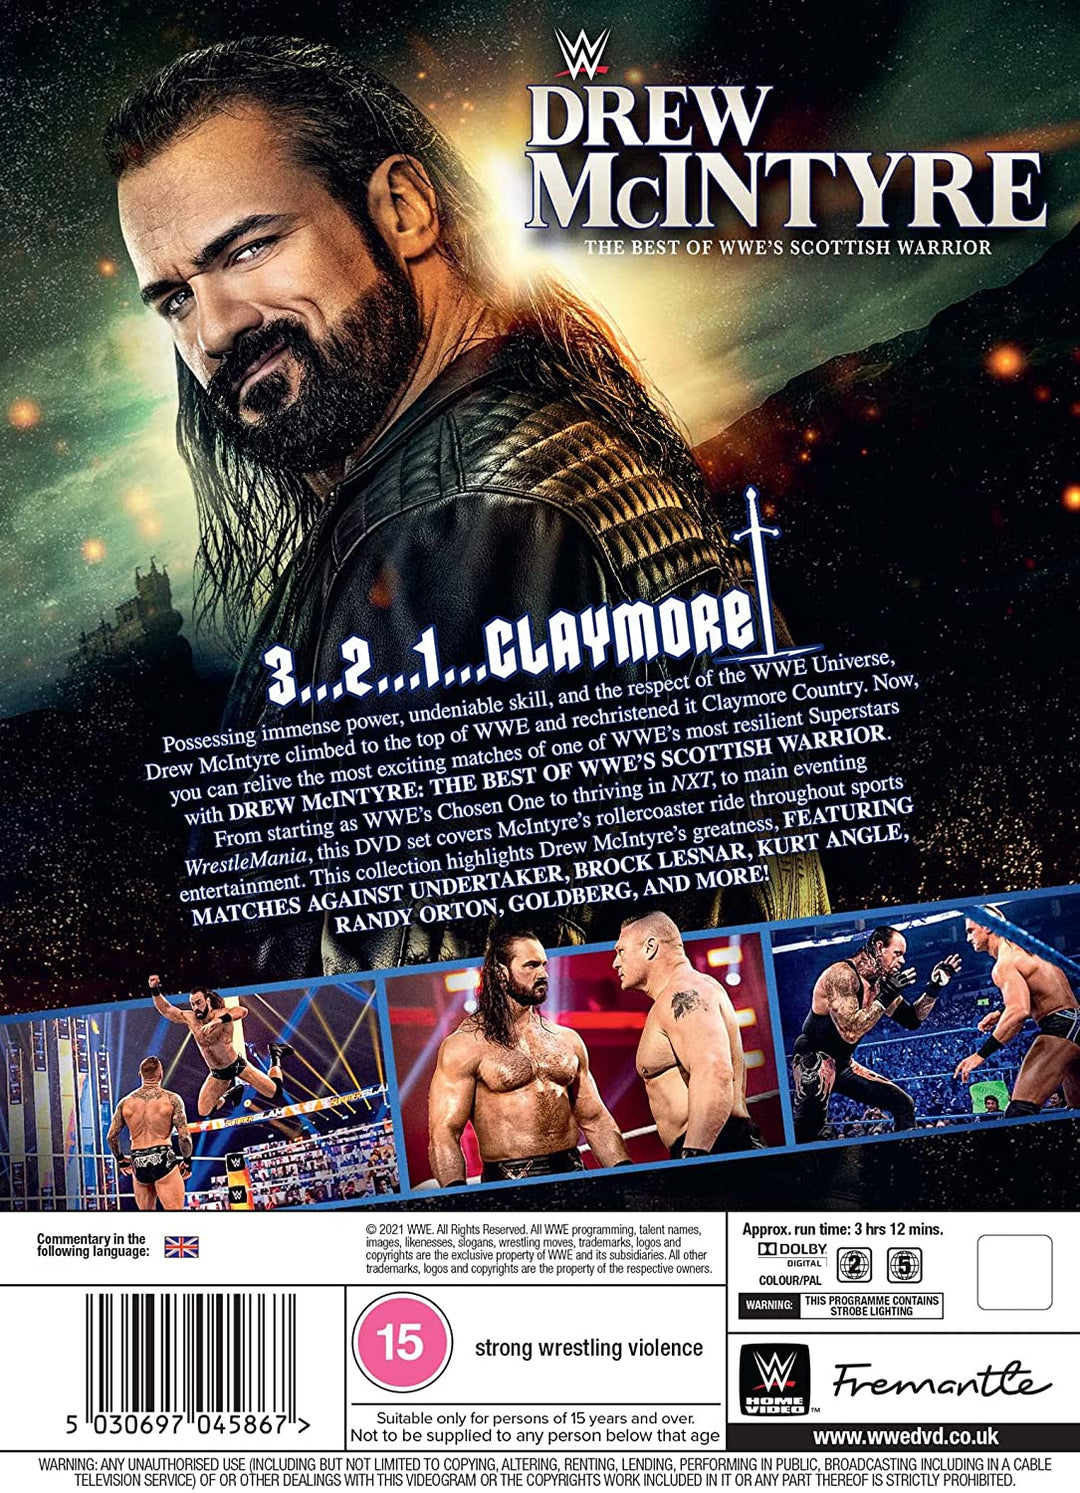 WWE: Drew McIntyre - The Best of WWE’s Scottish Warrior [2021] [DVD]